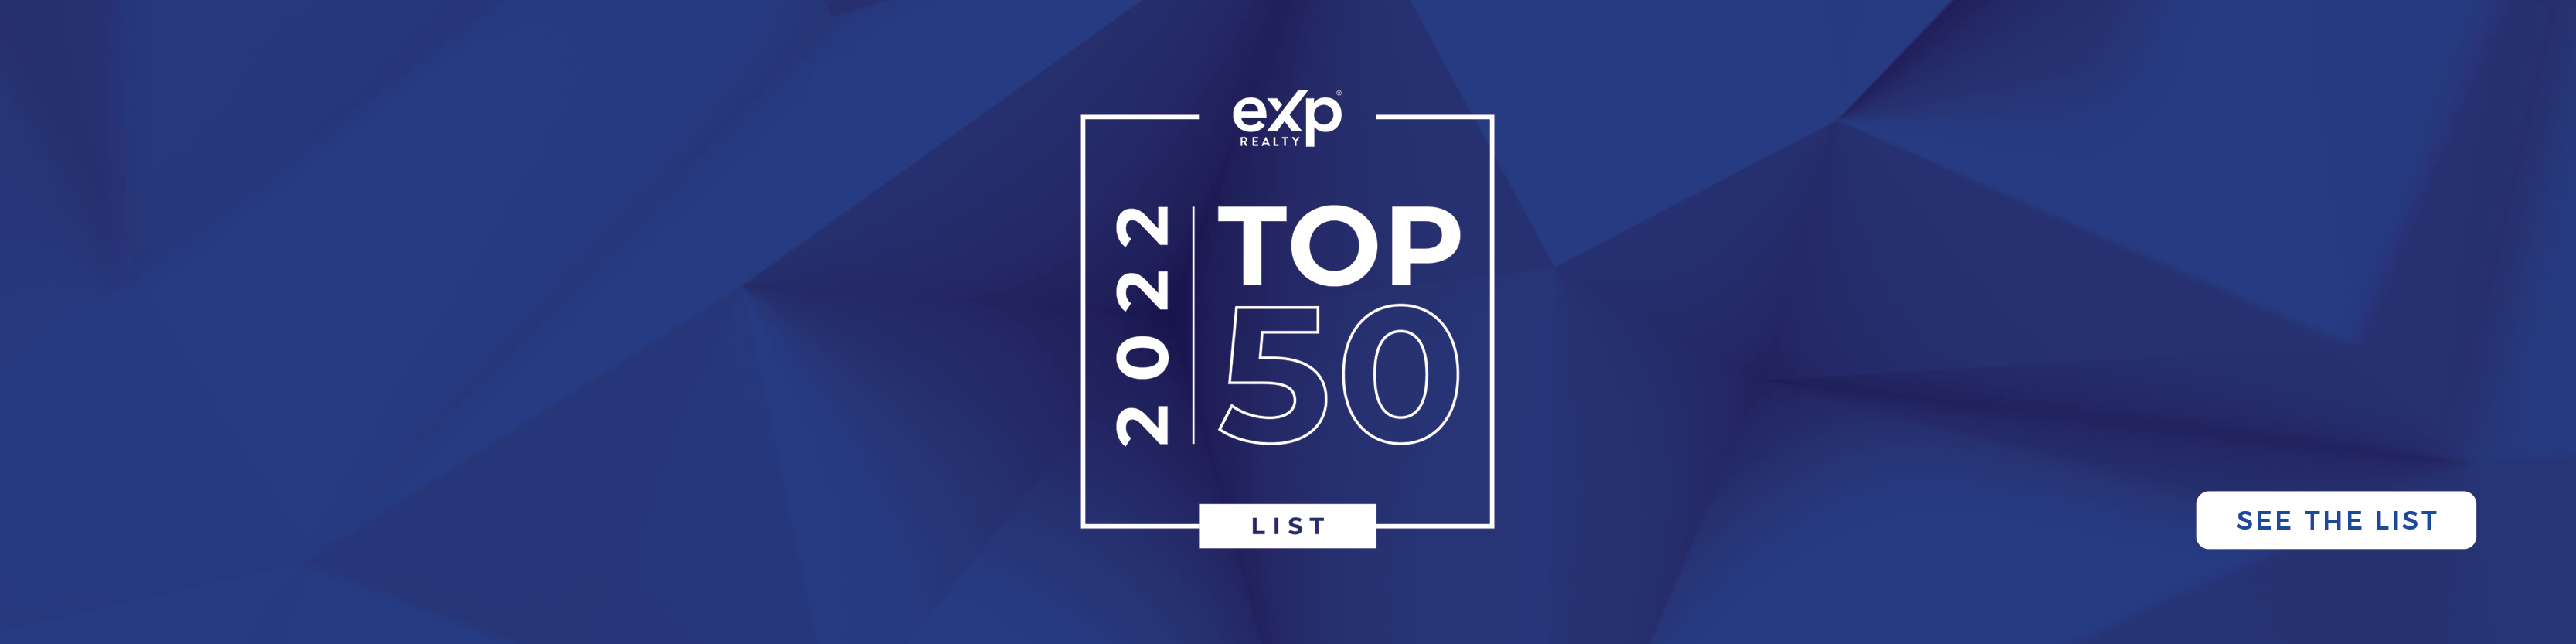 Top 50 lists